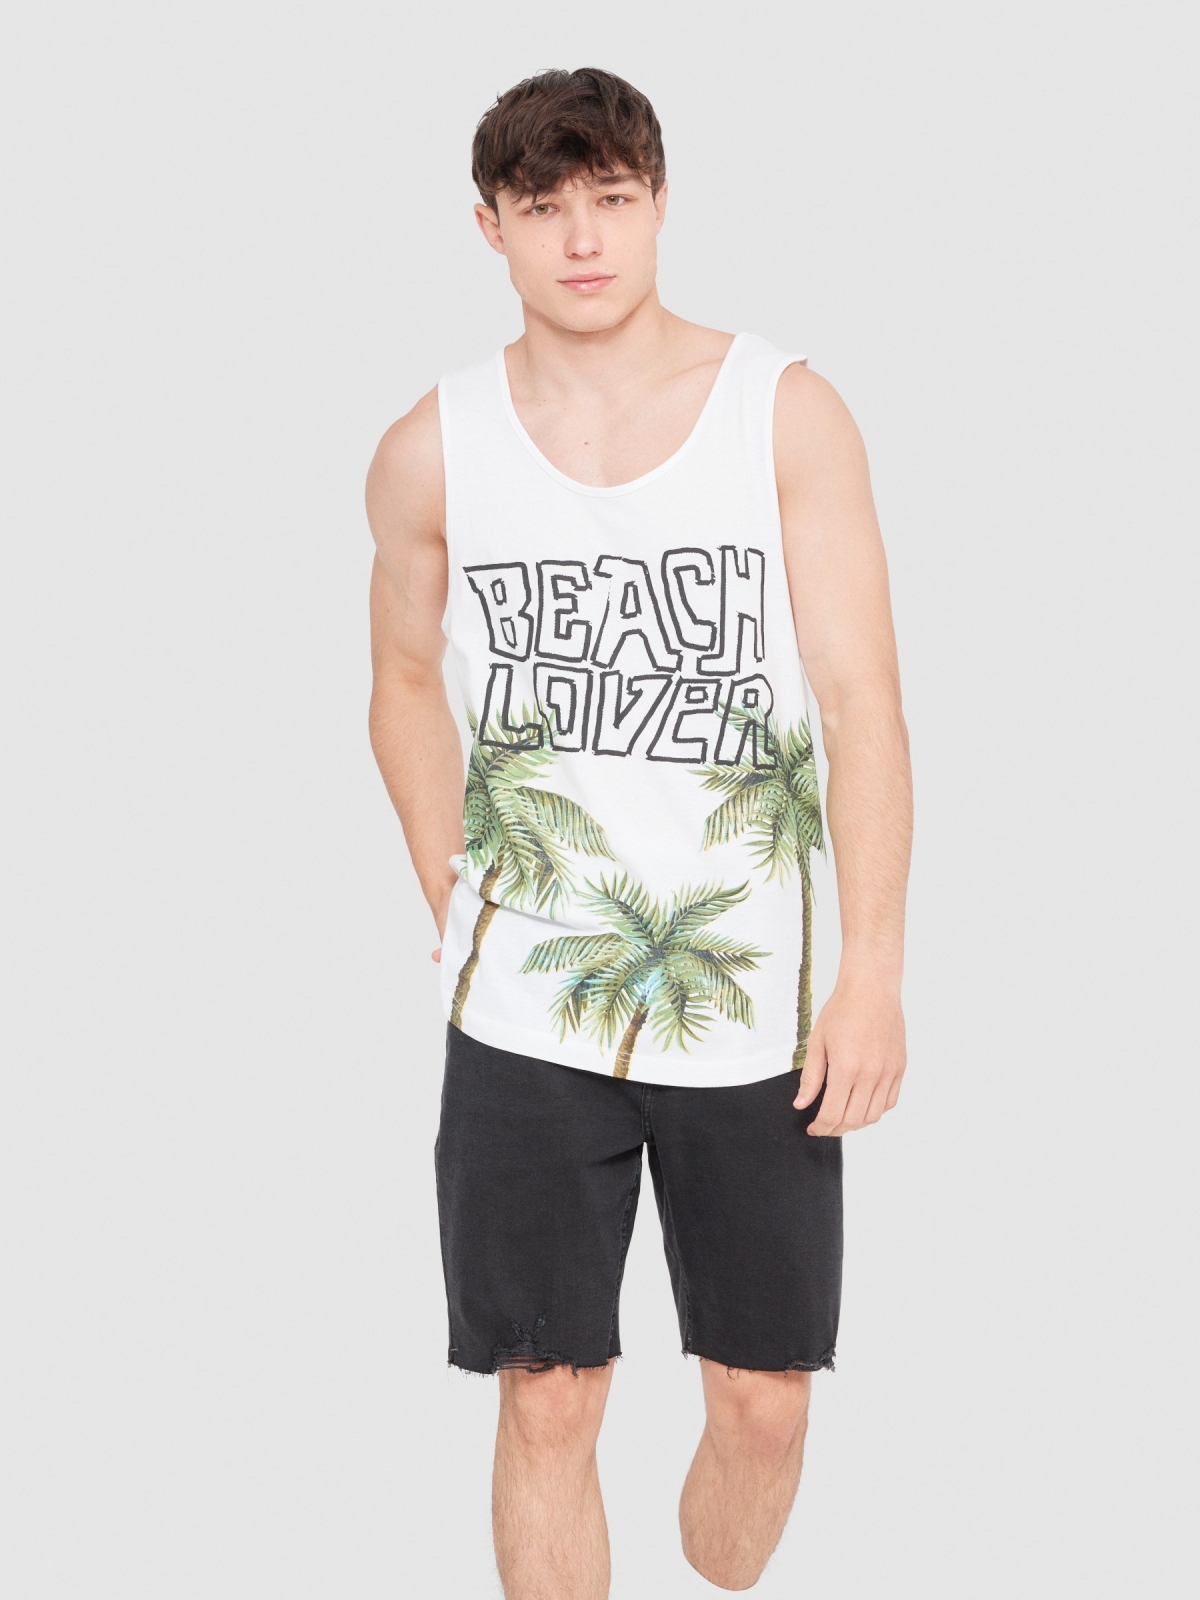 Camiseta tirantes Beach lover blanco vista media frontal